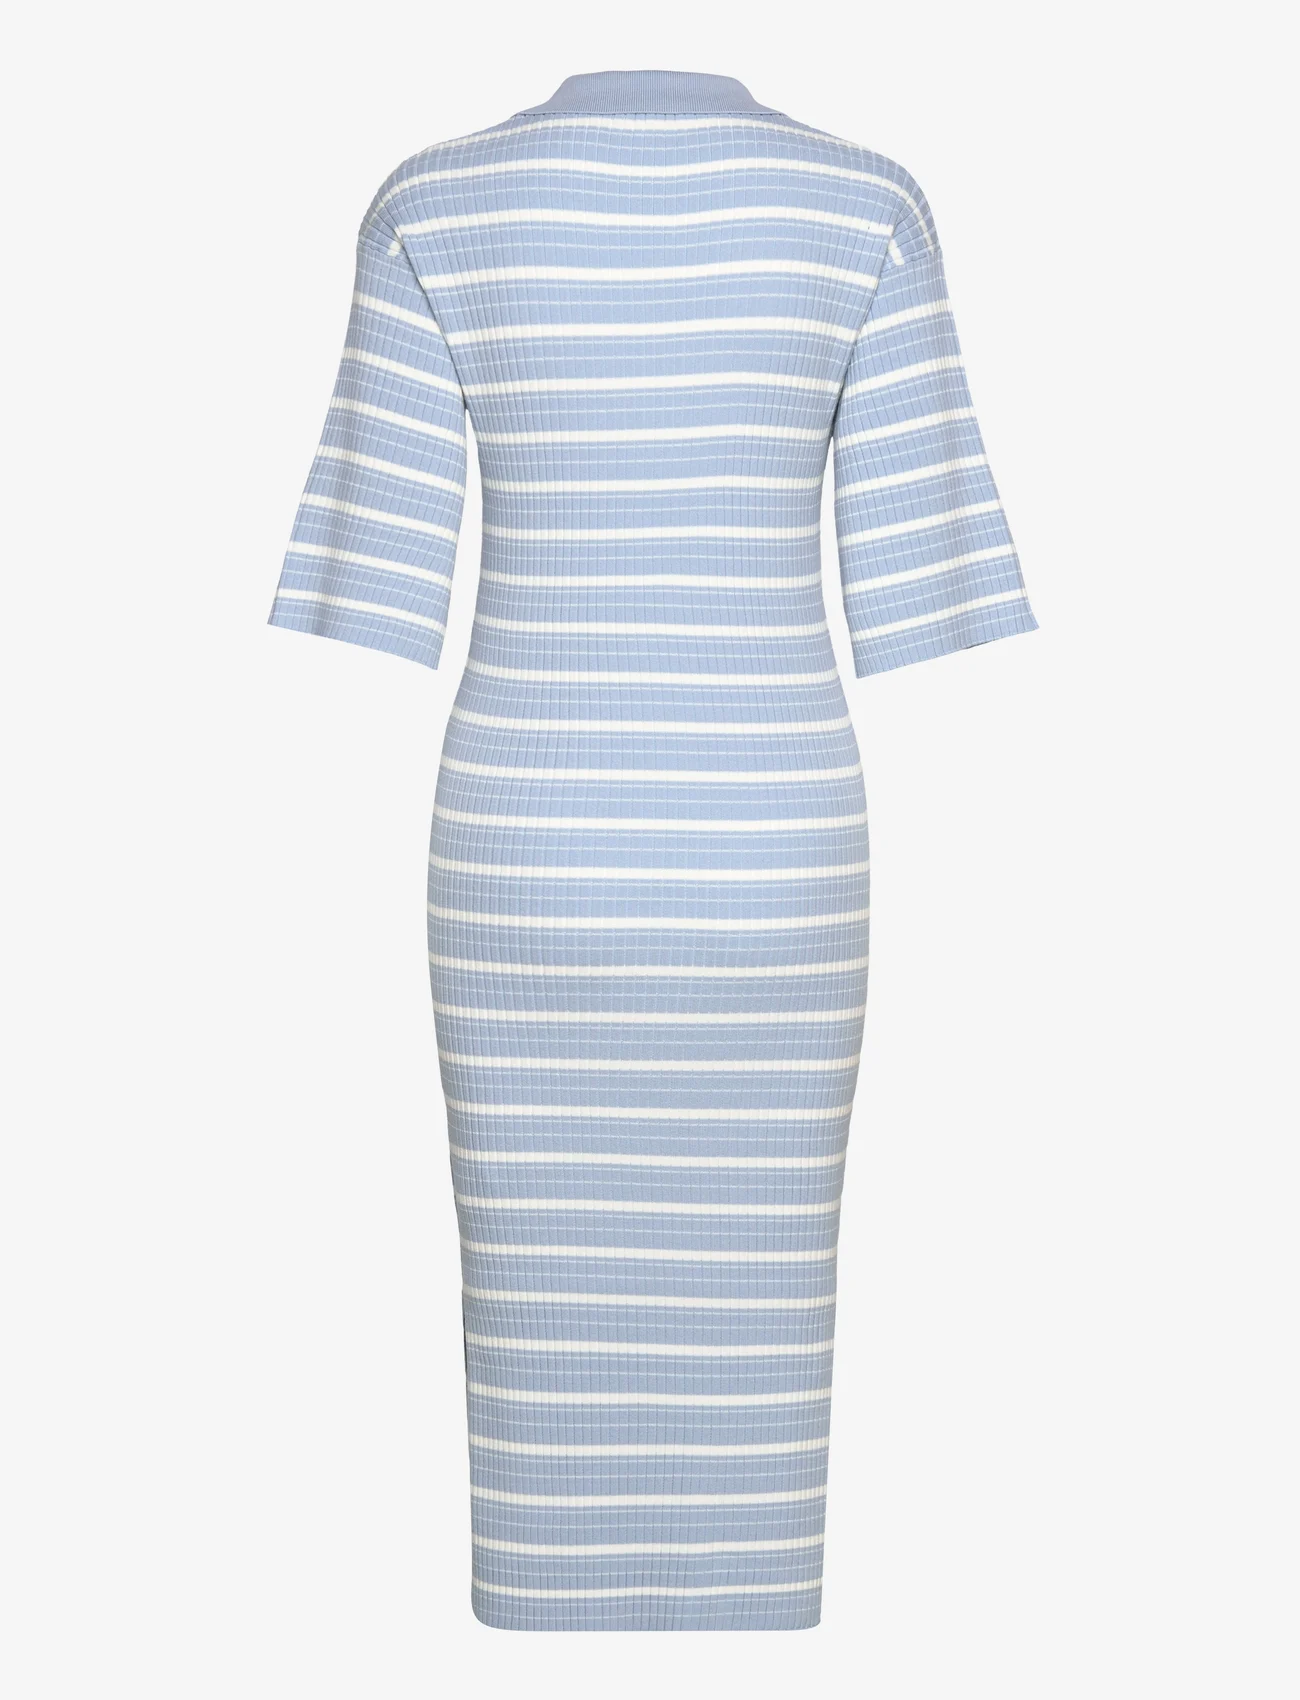 Esme Studios - ESAura Polo Dress Knit - bodycon dresses - blue fog stripes - 1